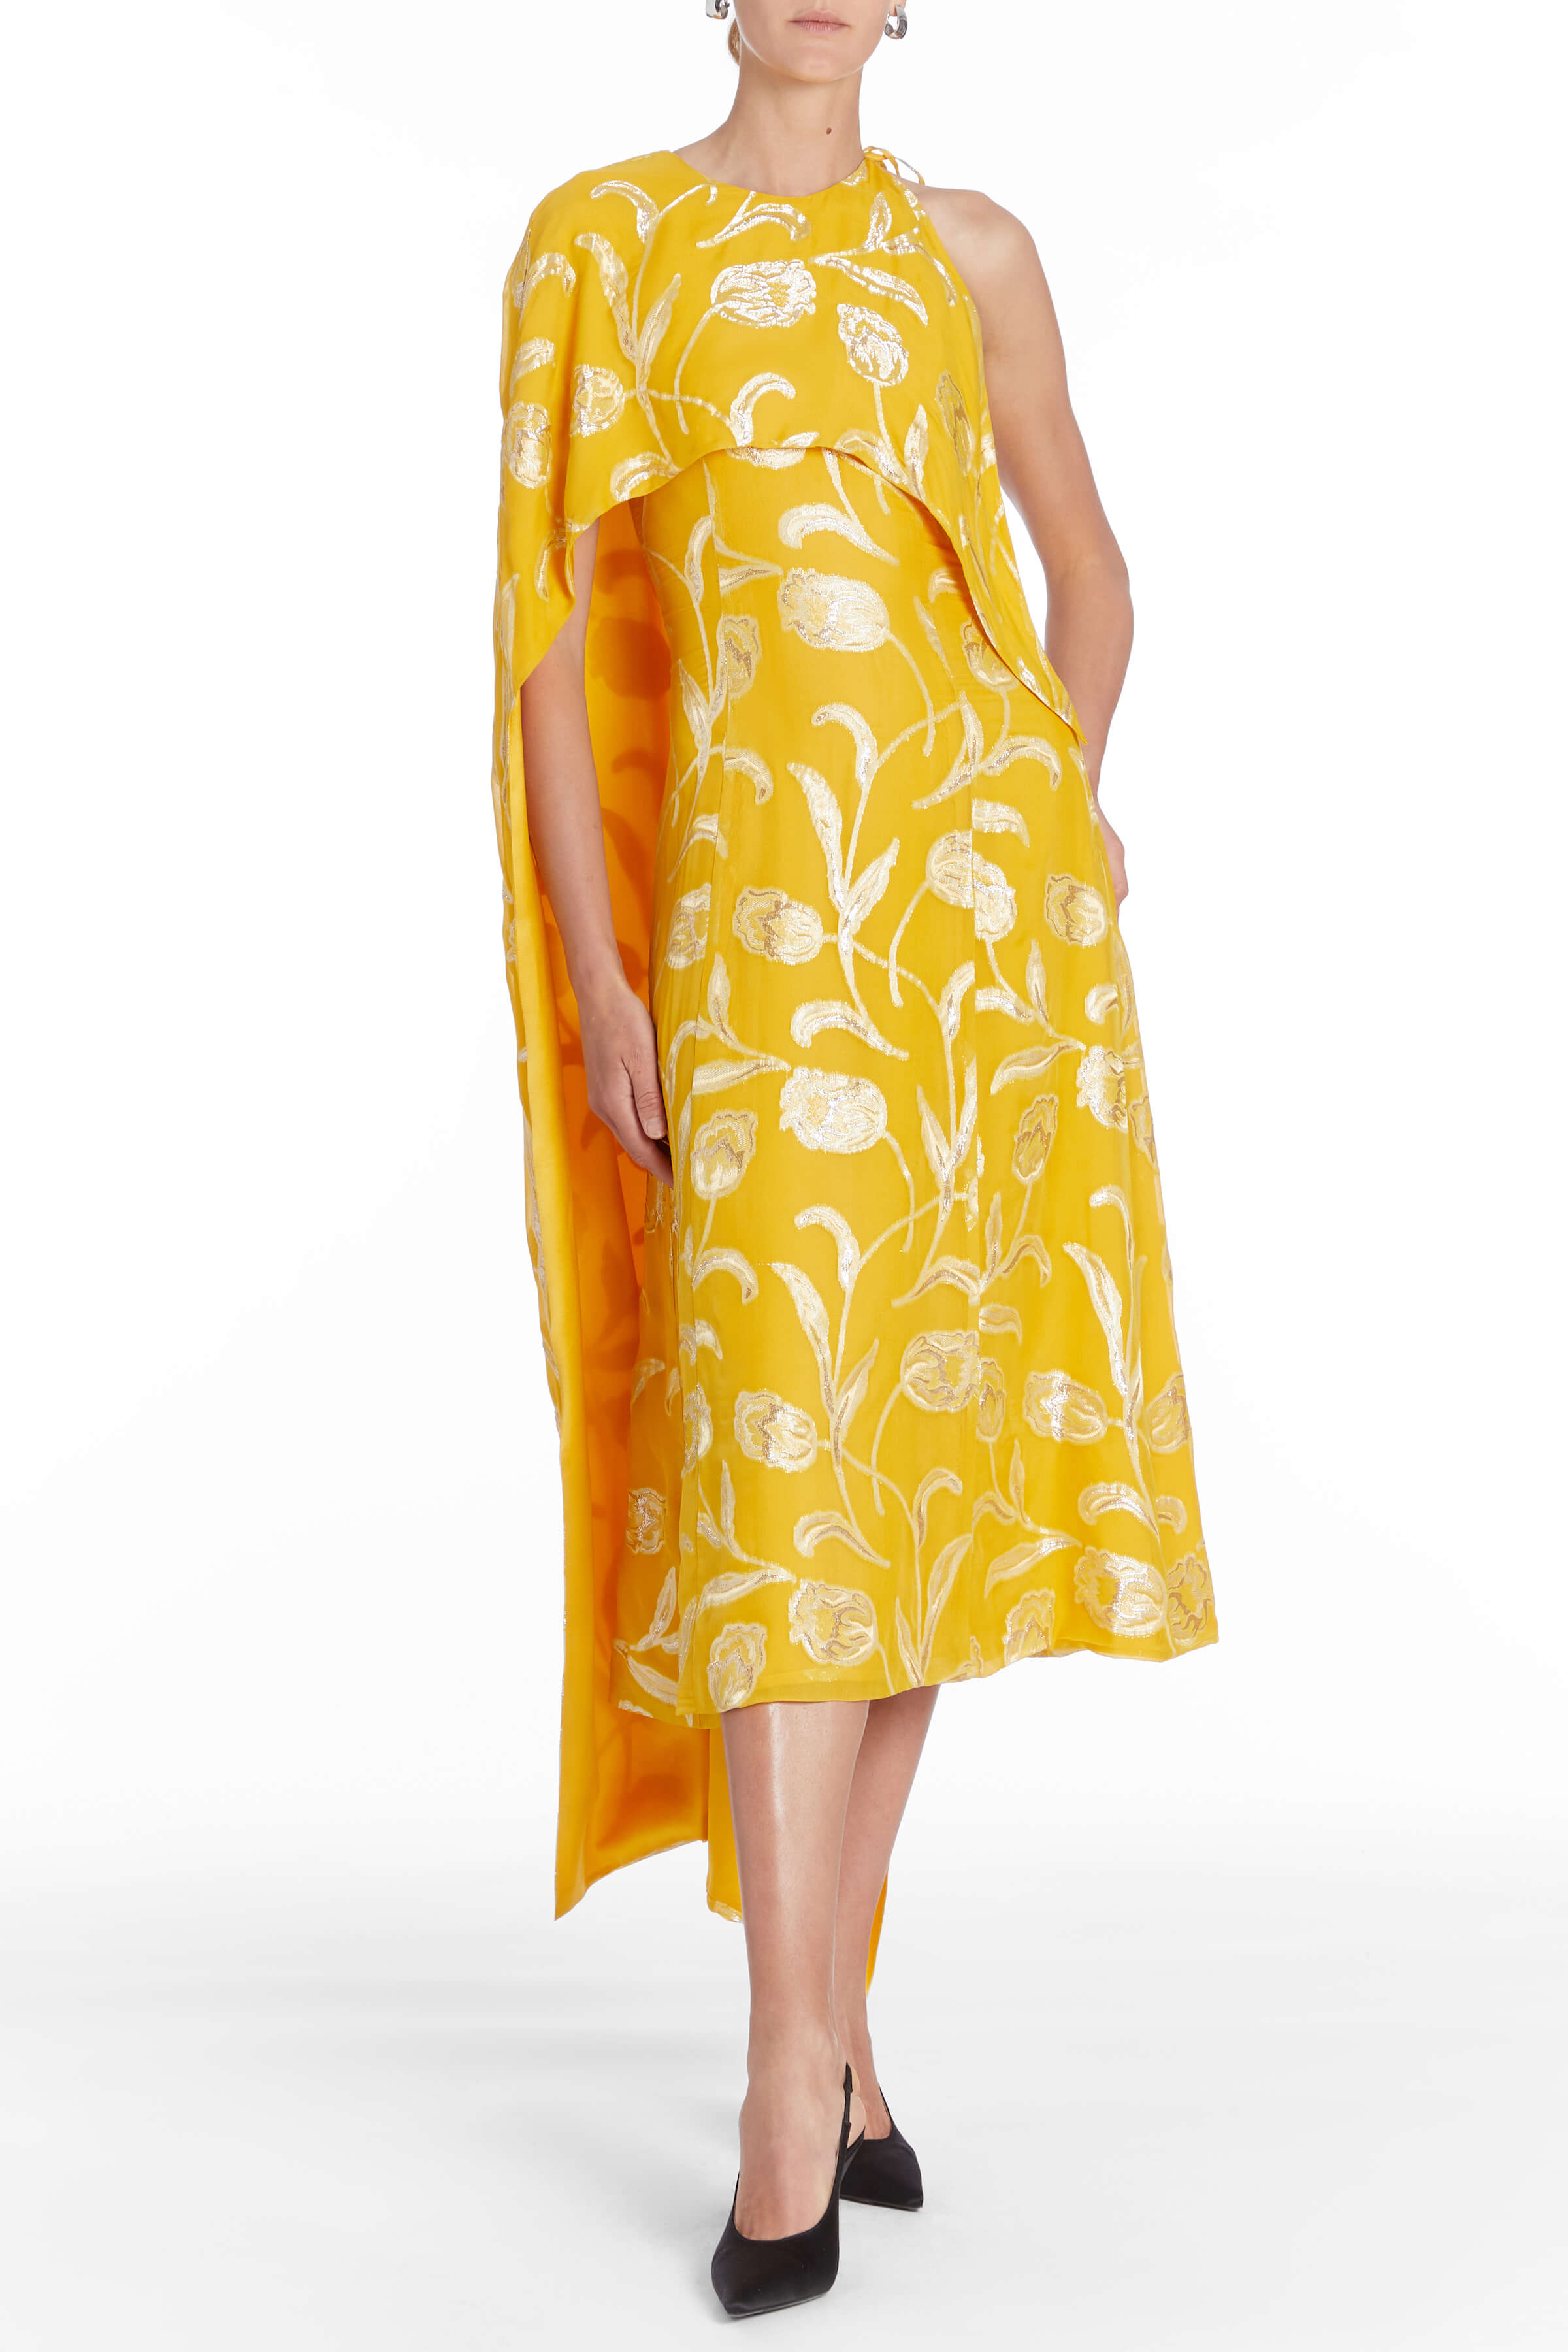 SALE: Kennedy Yellow Cape Dress